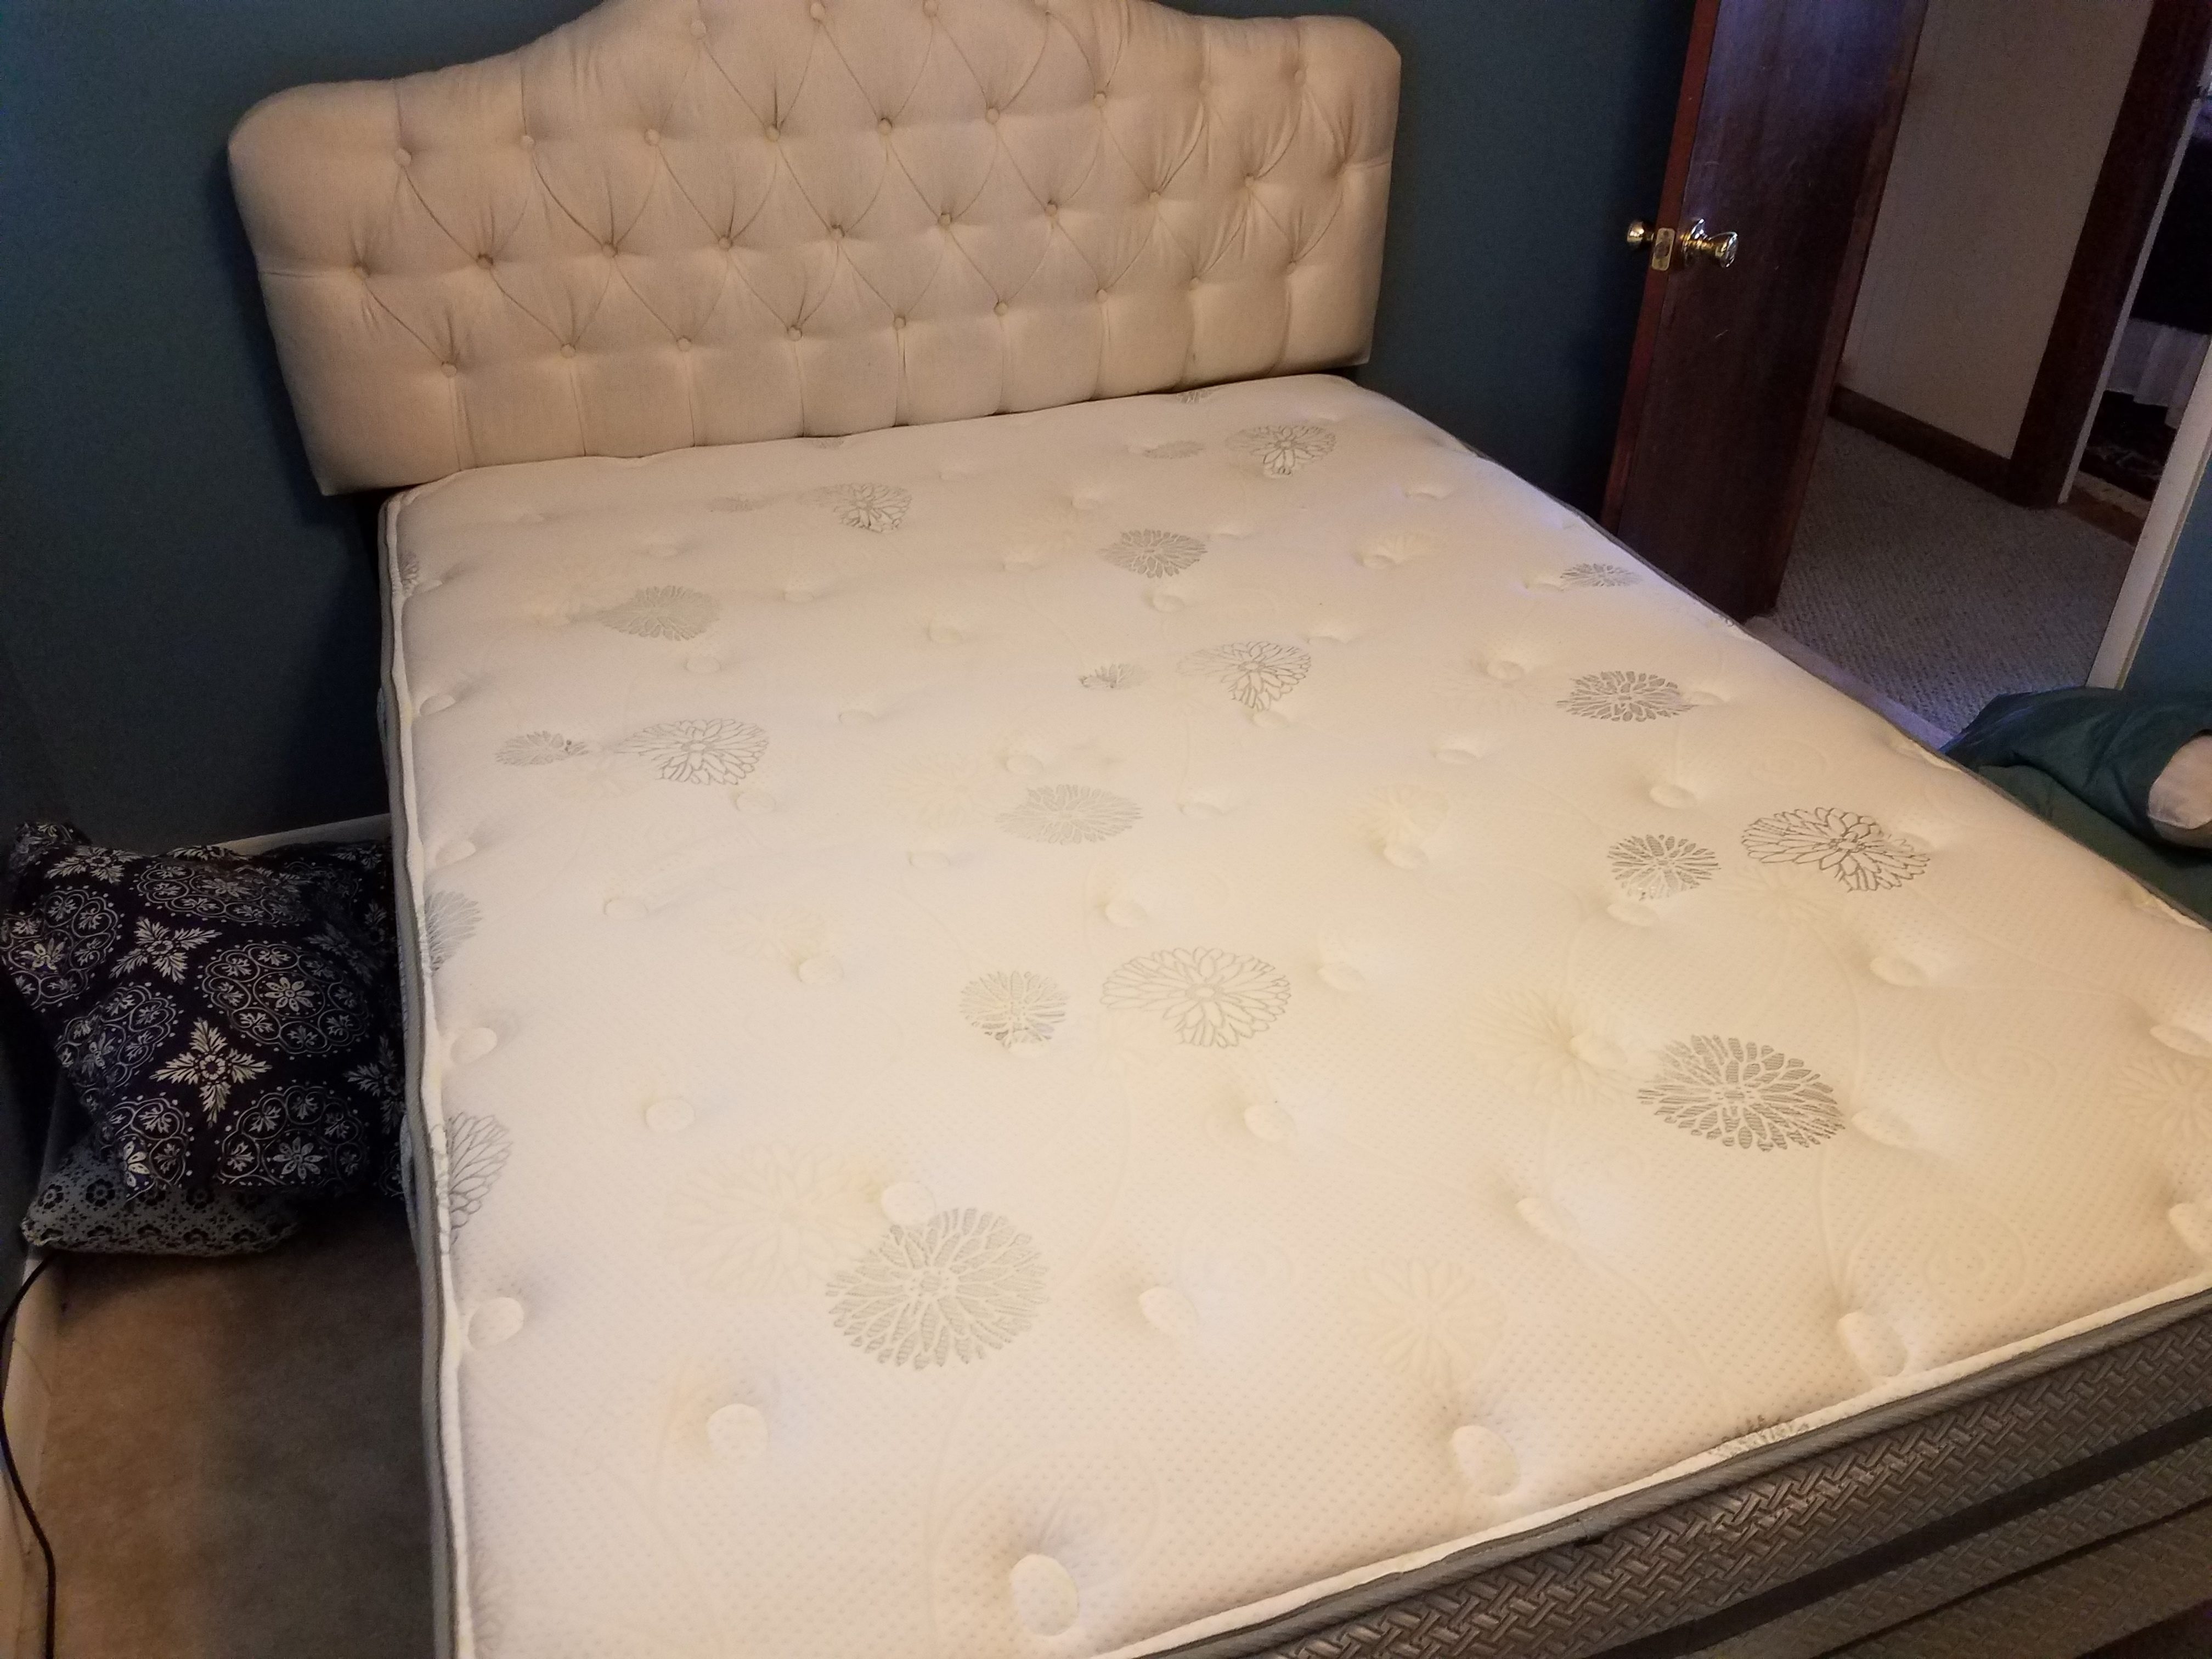 boscov's full size mattress